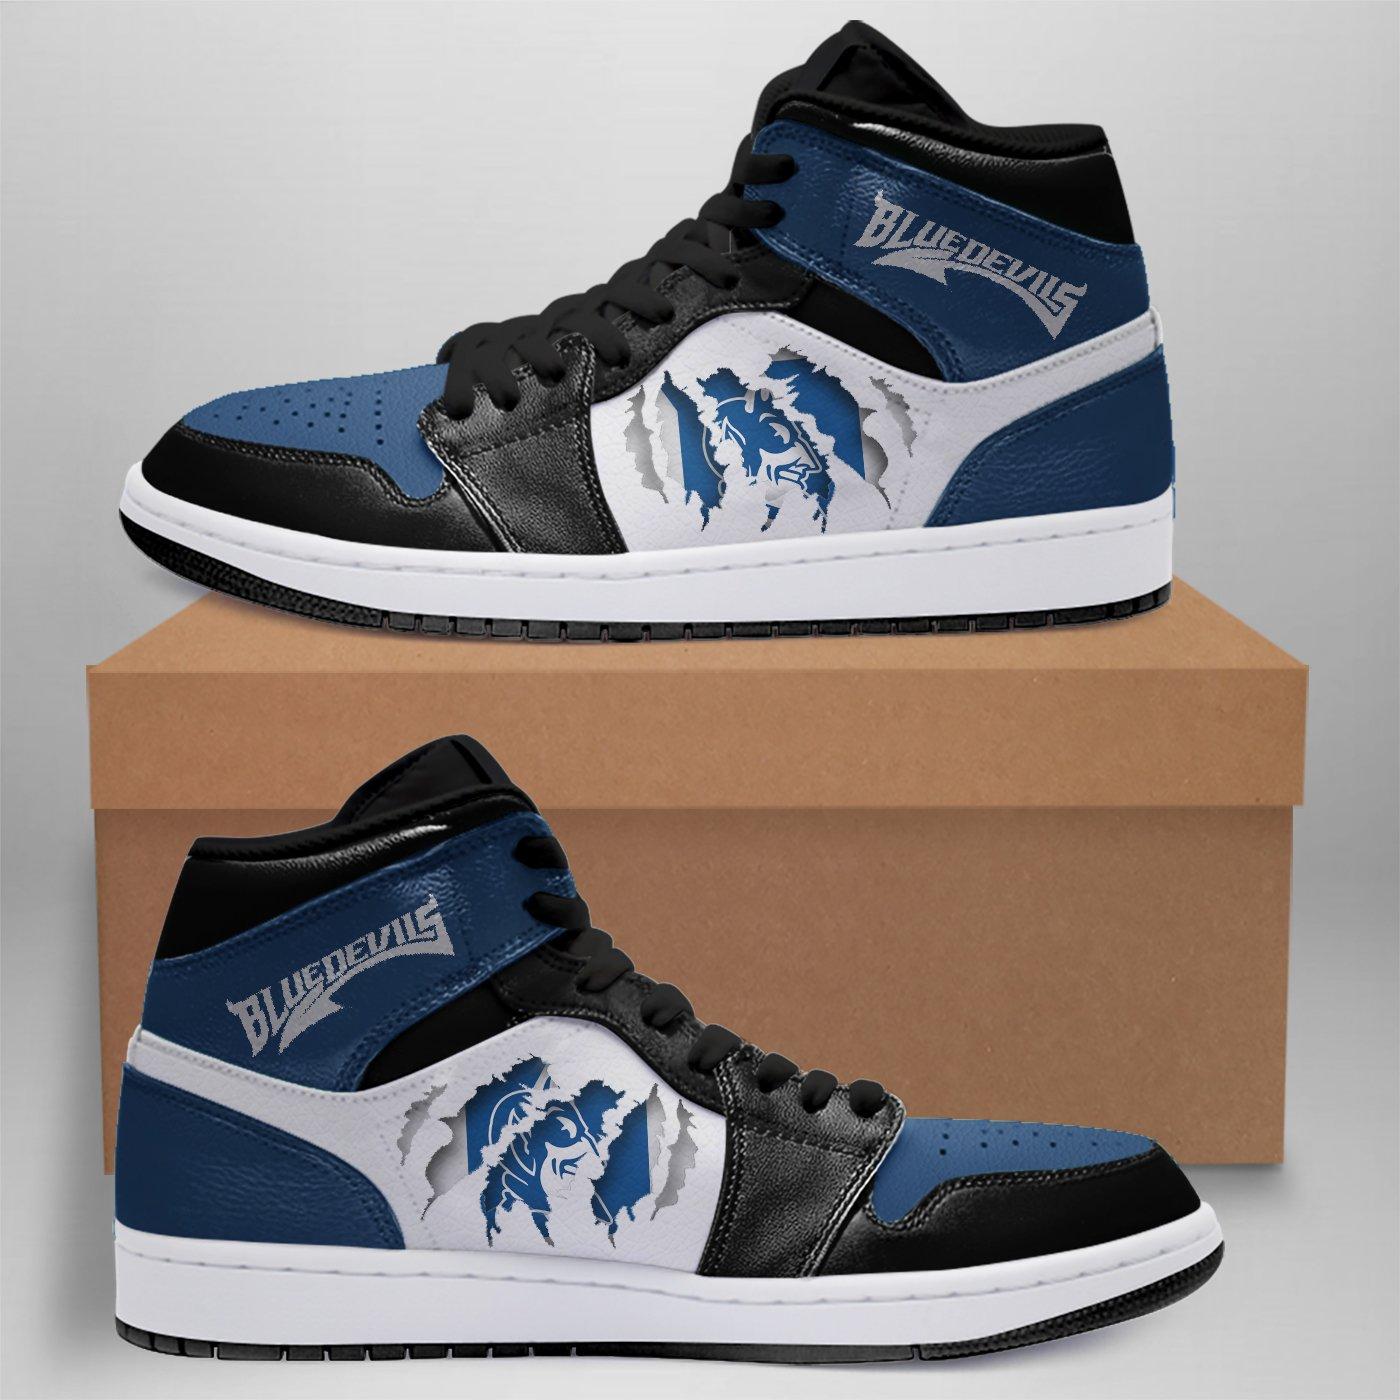 Duke Blue Devils Air Jordan Shoes Sport 